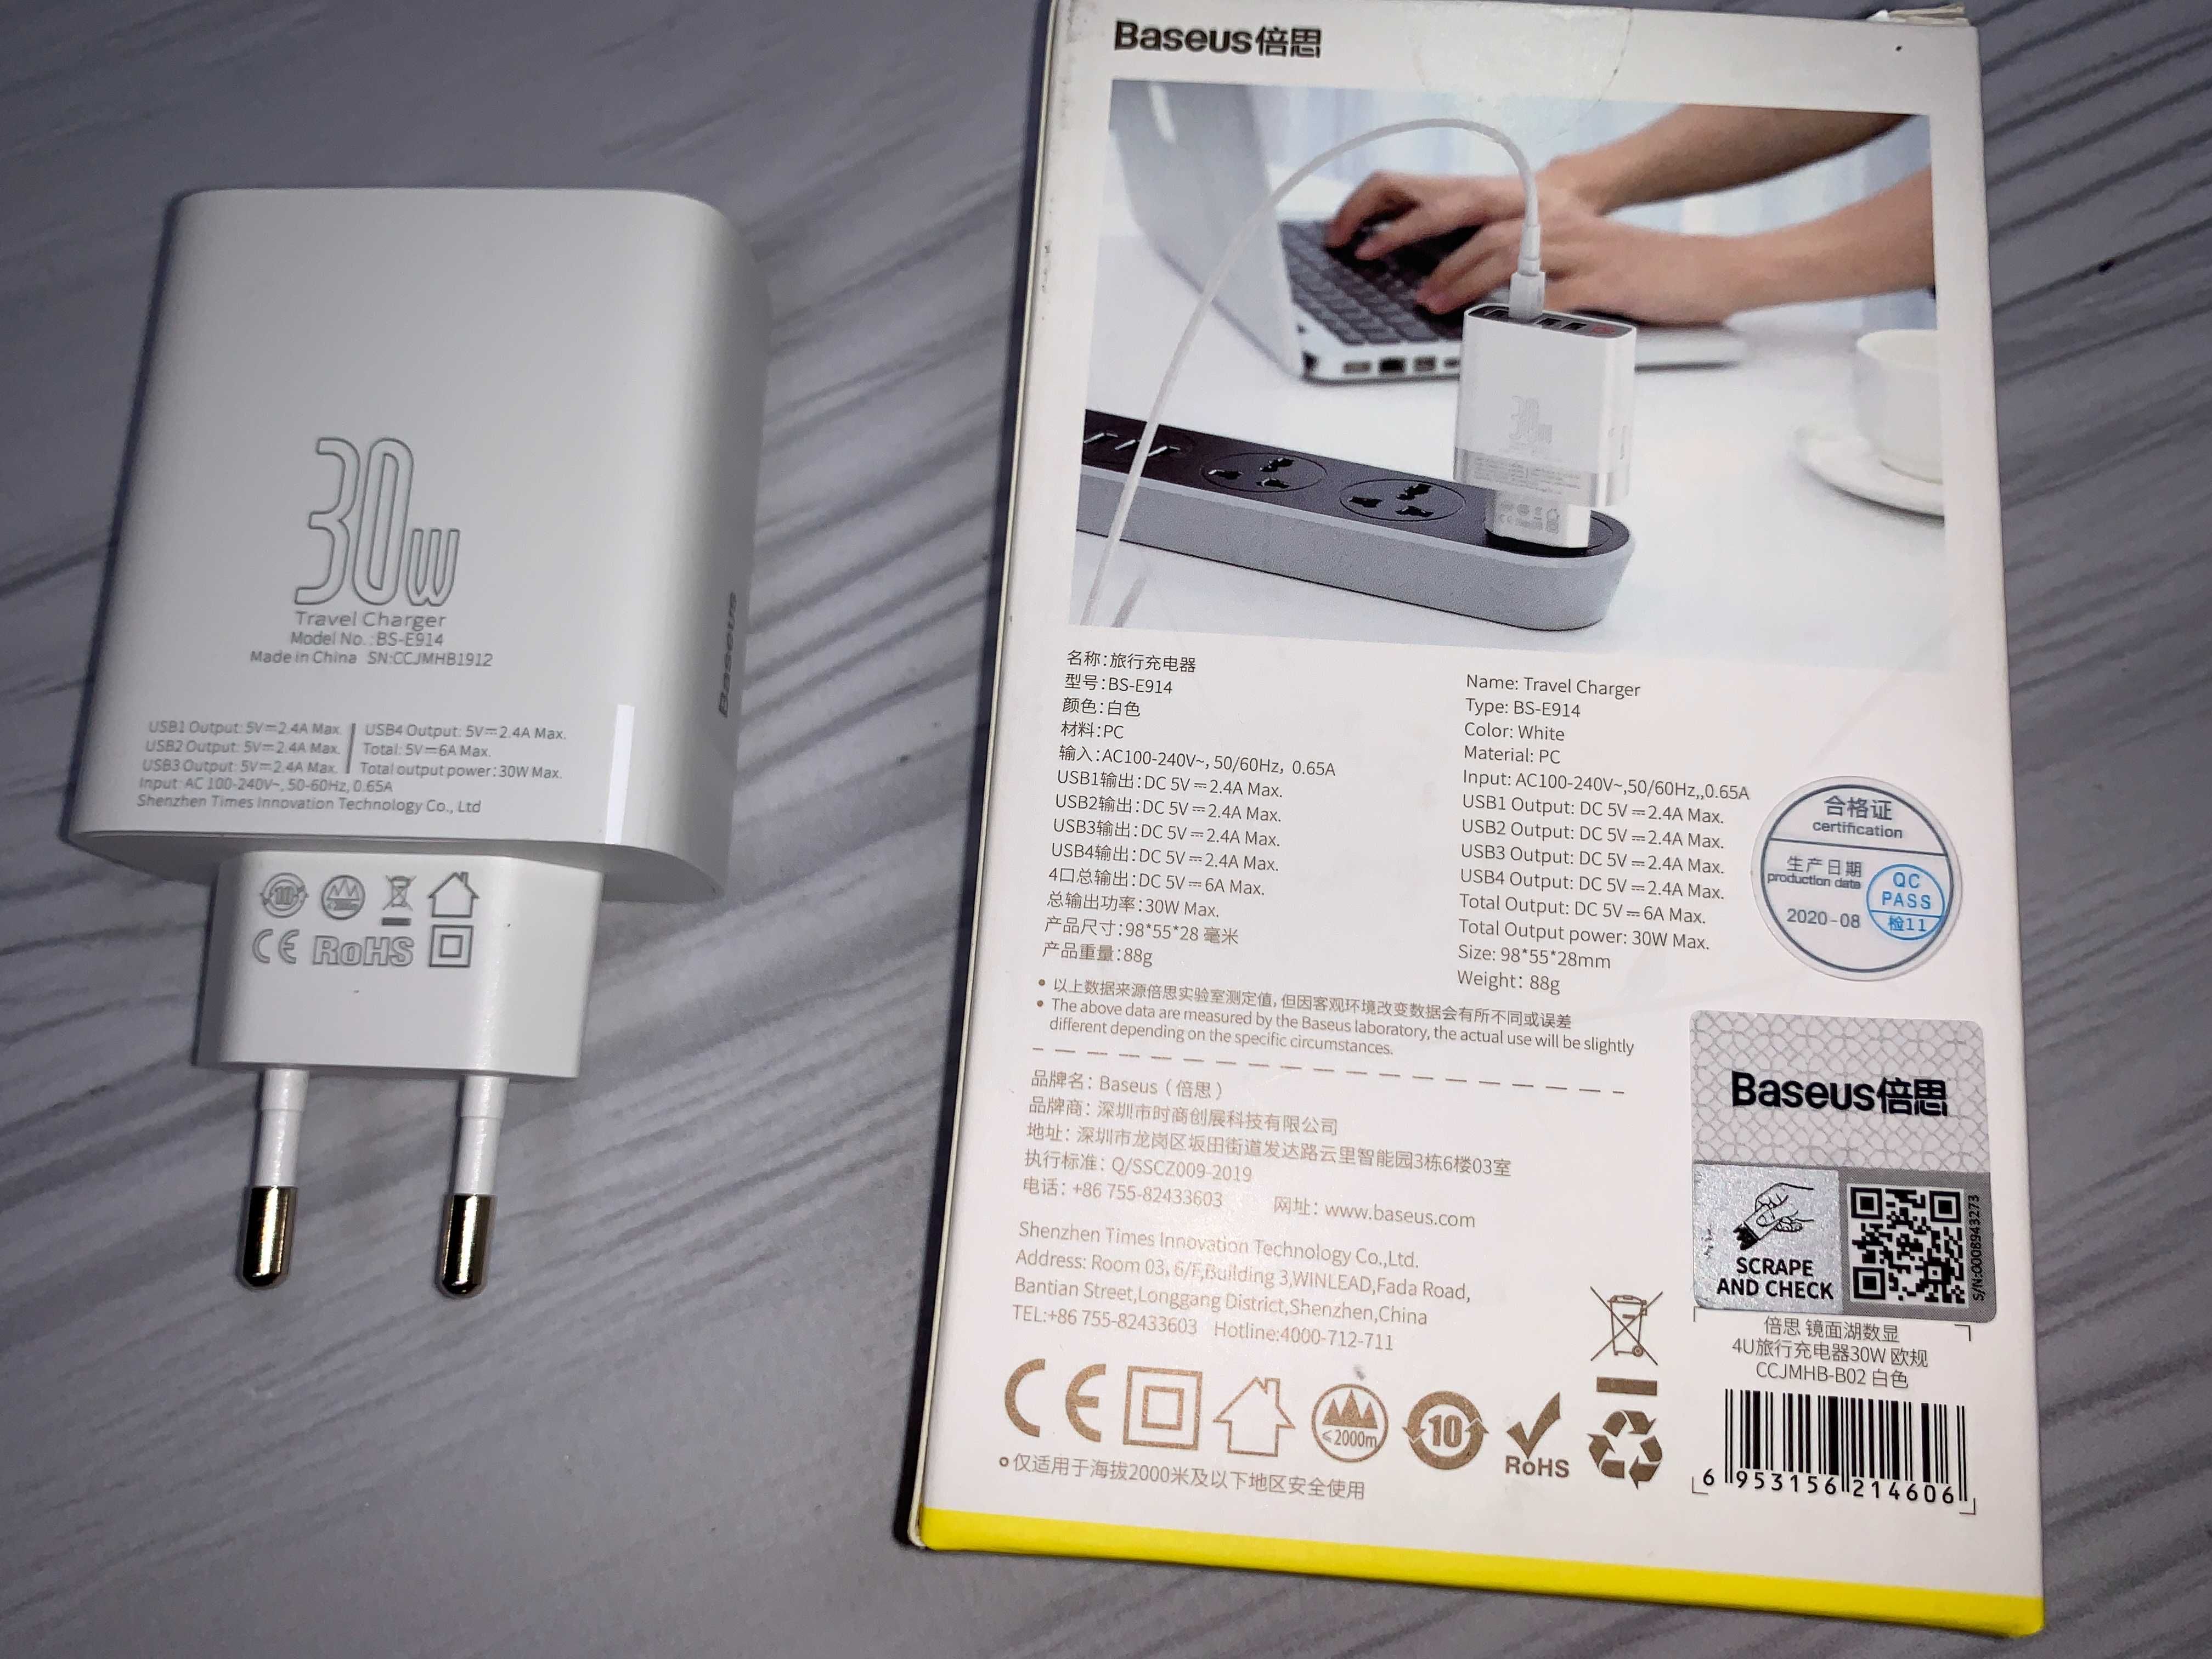 Baseus 30W (обмен/продажа) 4 usb Digital Display power adapter